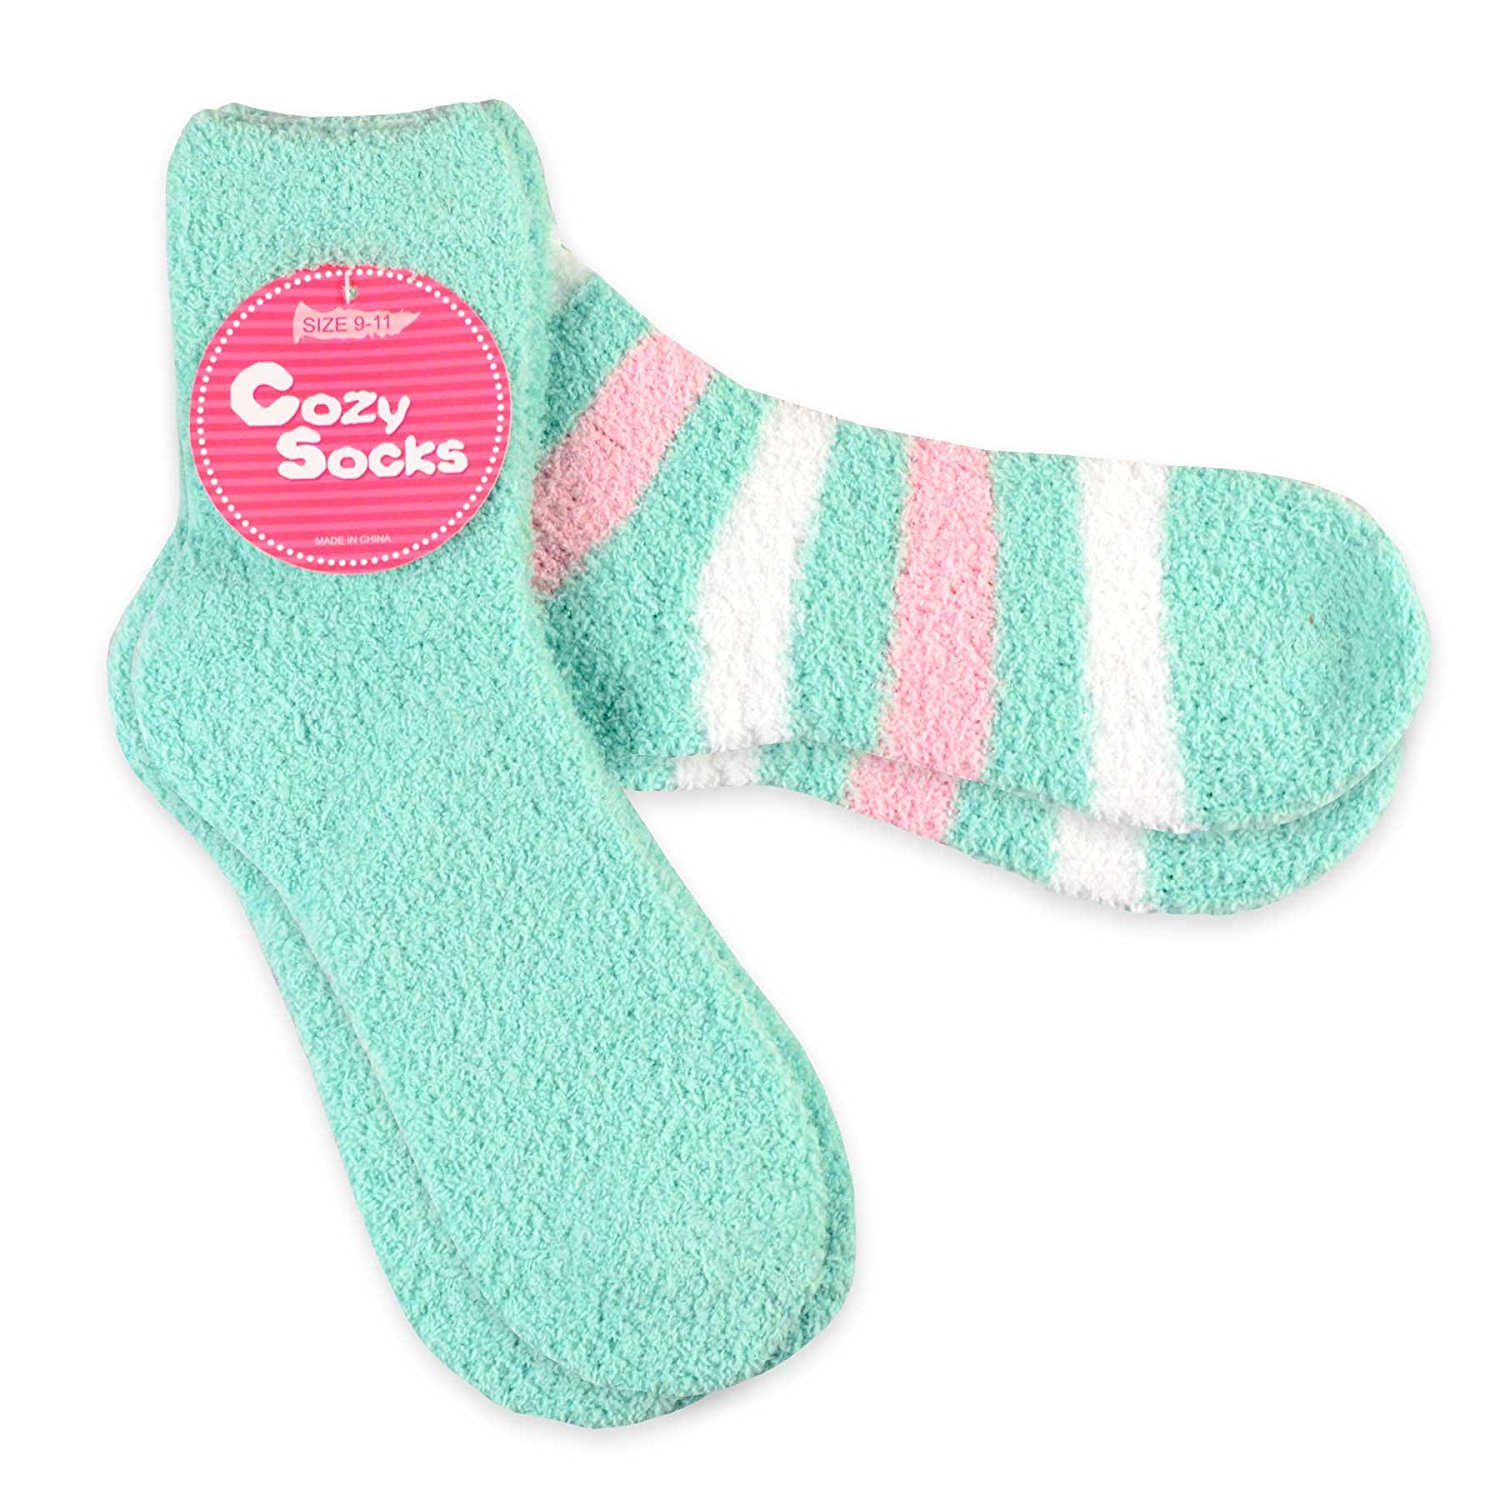 size 3-6 socks READ DESCRIPTION ! PICK AND MIX 2 Pairs Cute Women Animal Socks